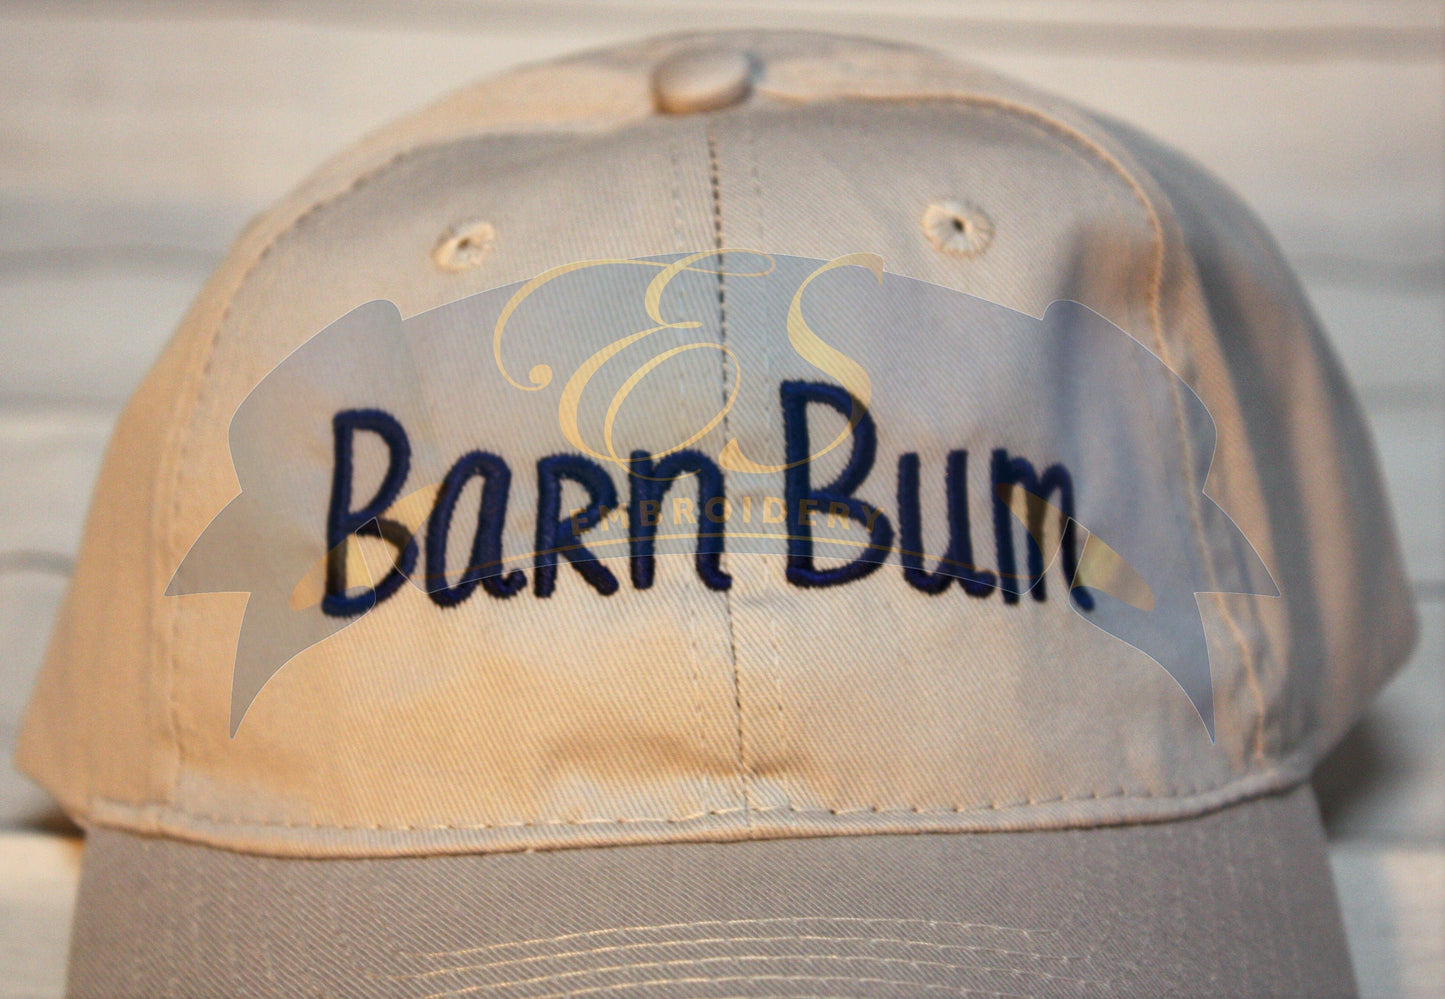 Barn Bum Hat